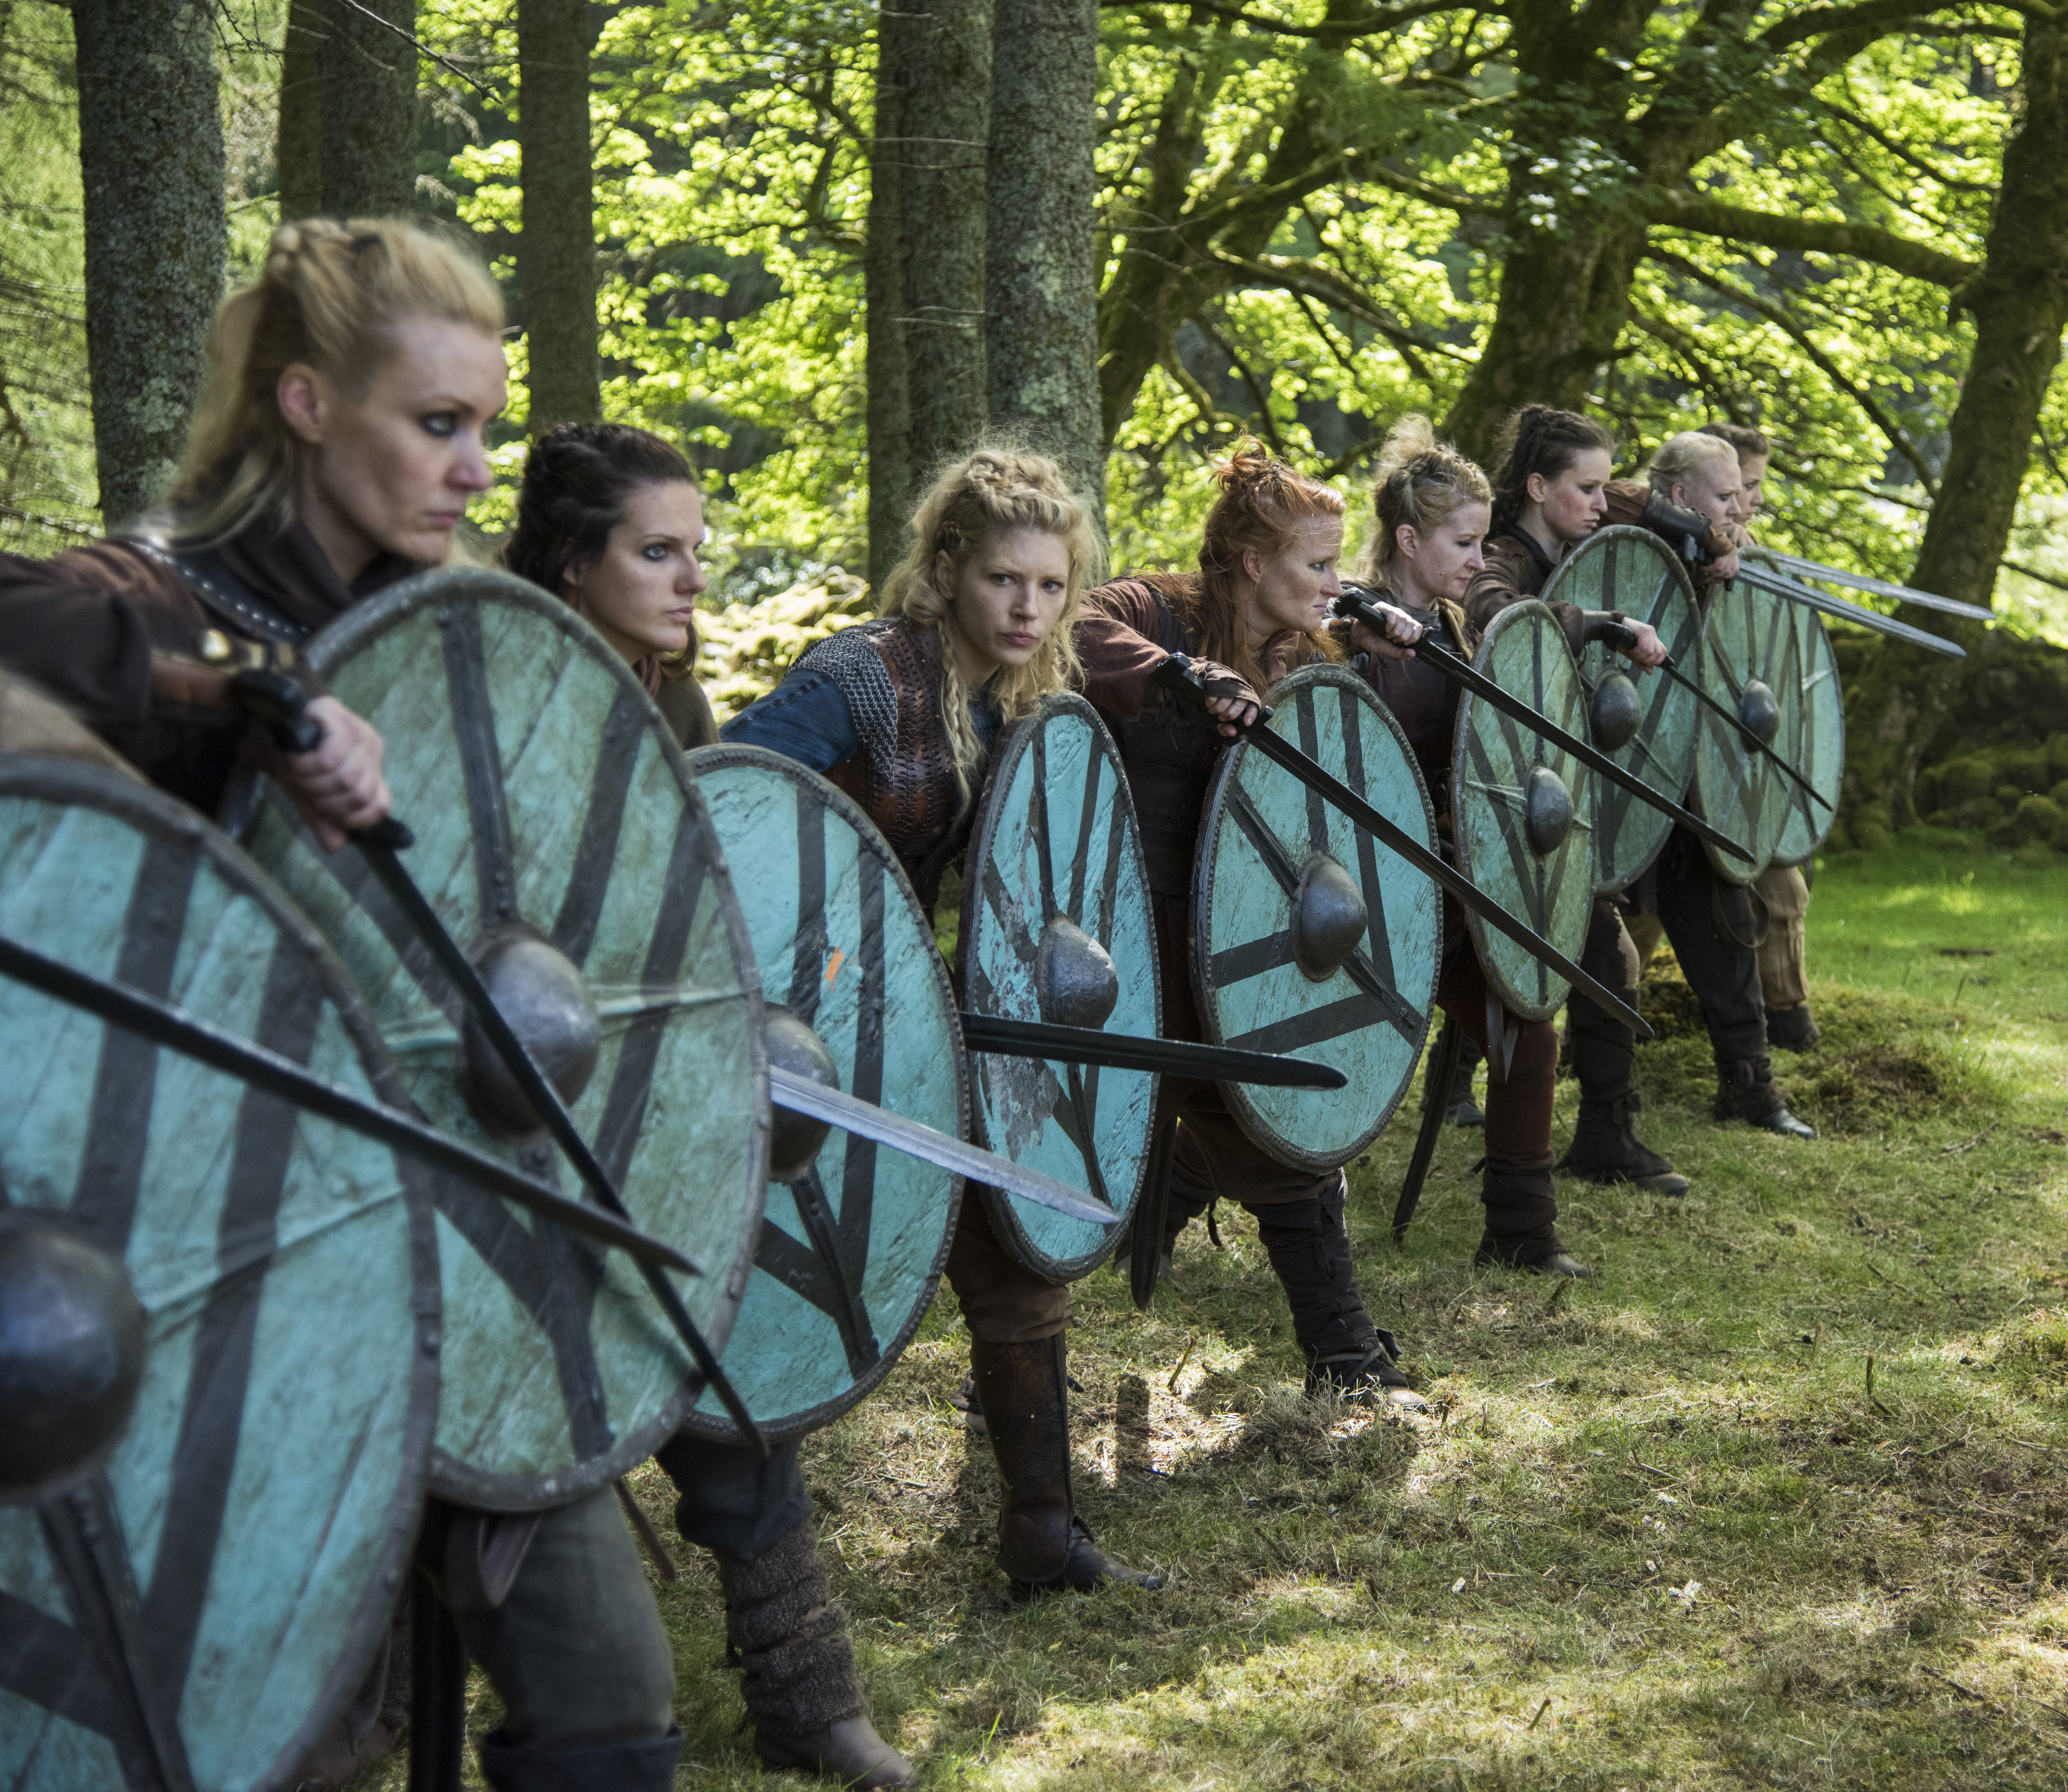  Womens Lagertha's Shield Maidens - Viking Warrior